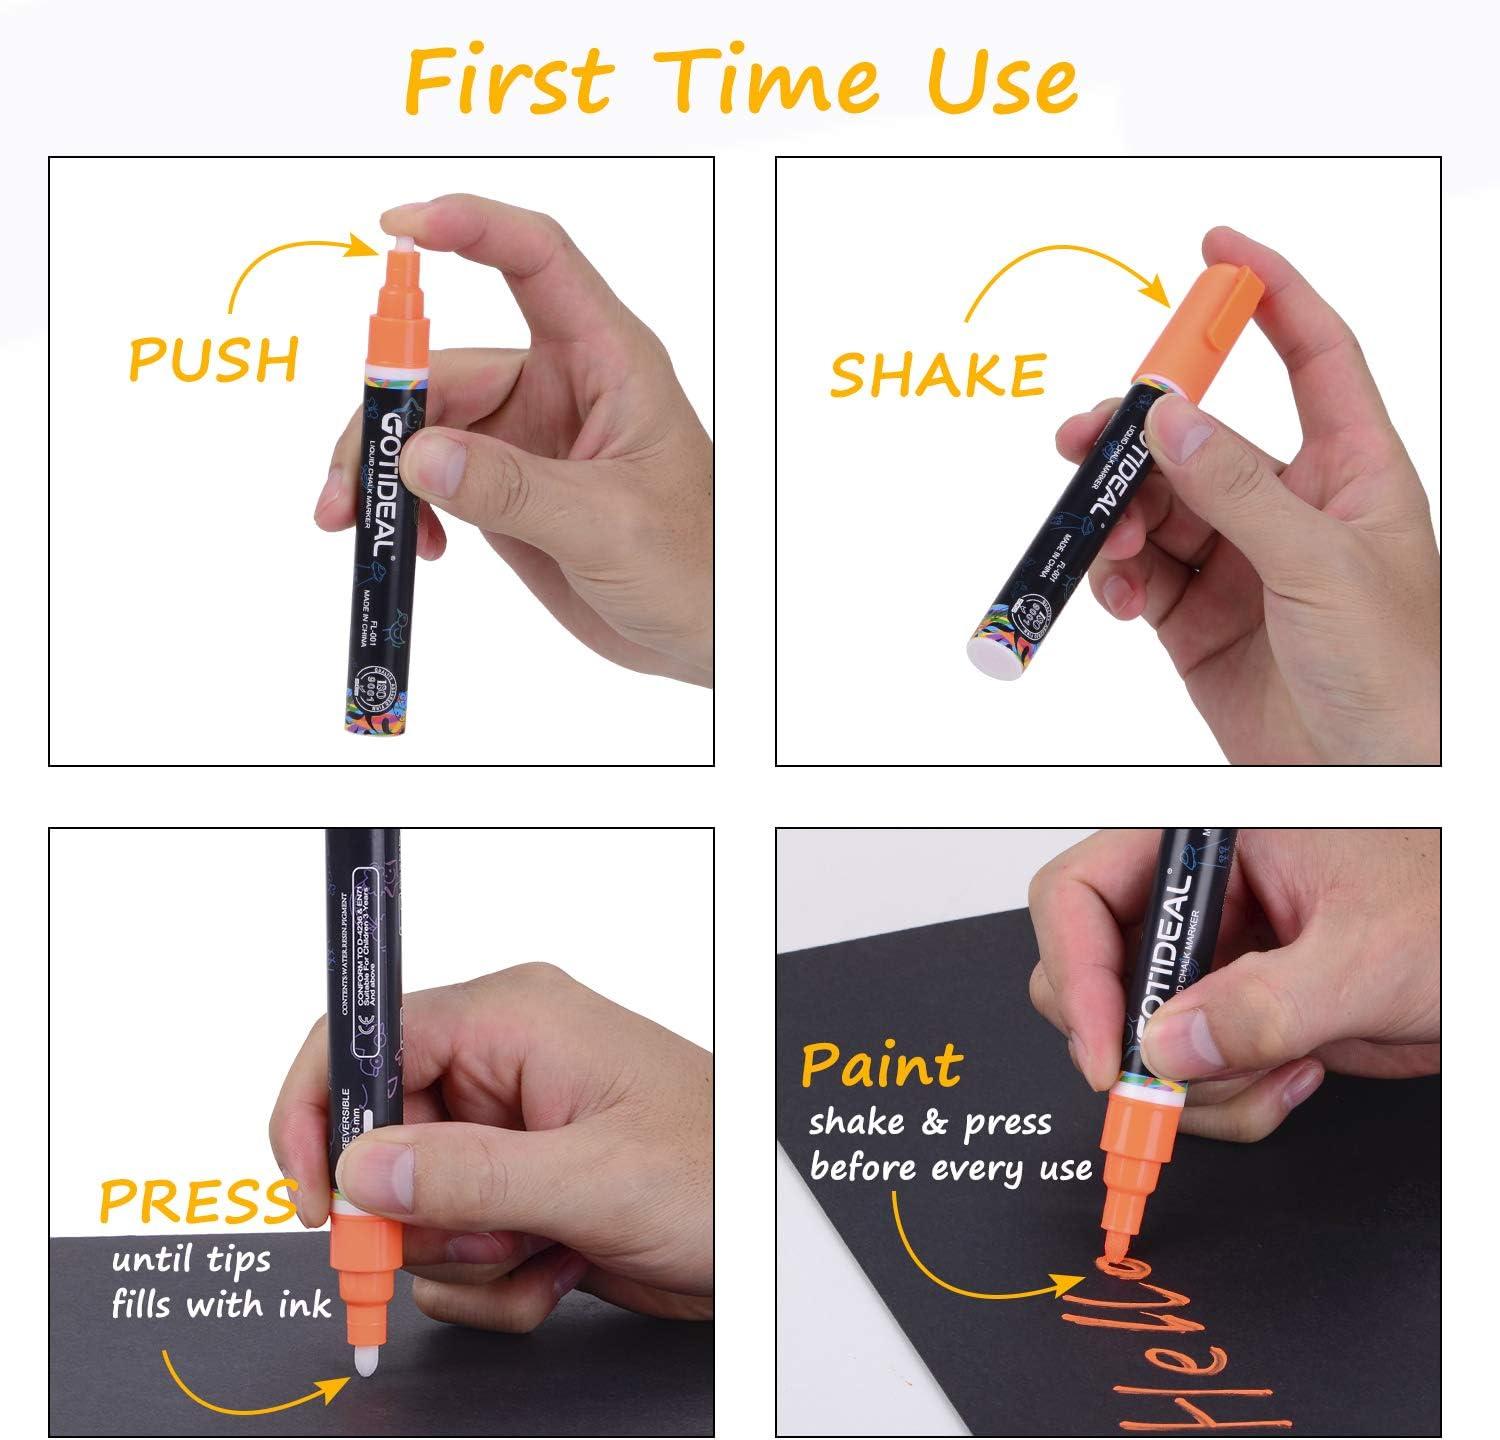 Liquid Chalk Markers for Chalkboard Wet Erase Metallic Colors Pens